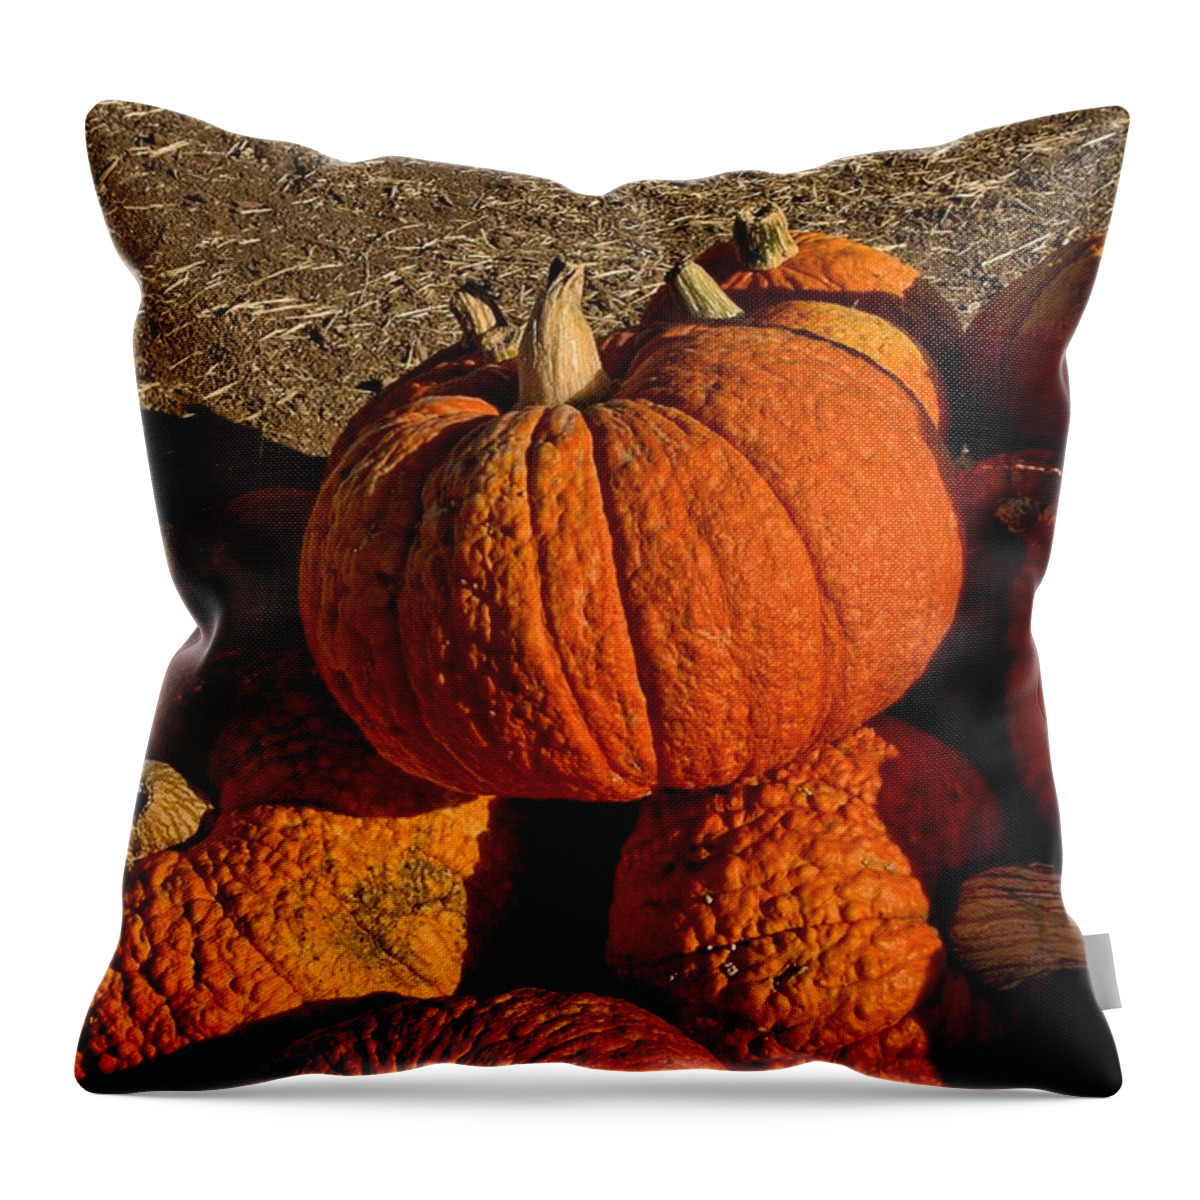 Fall Throw Pillow featuring the photograph Knarly Pumpkin by Michael Gordon